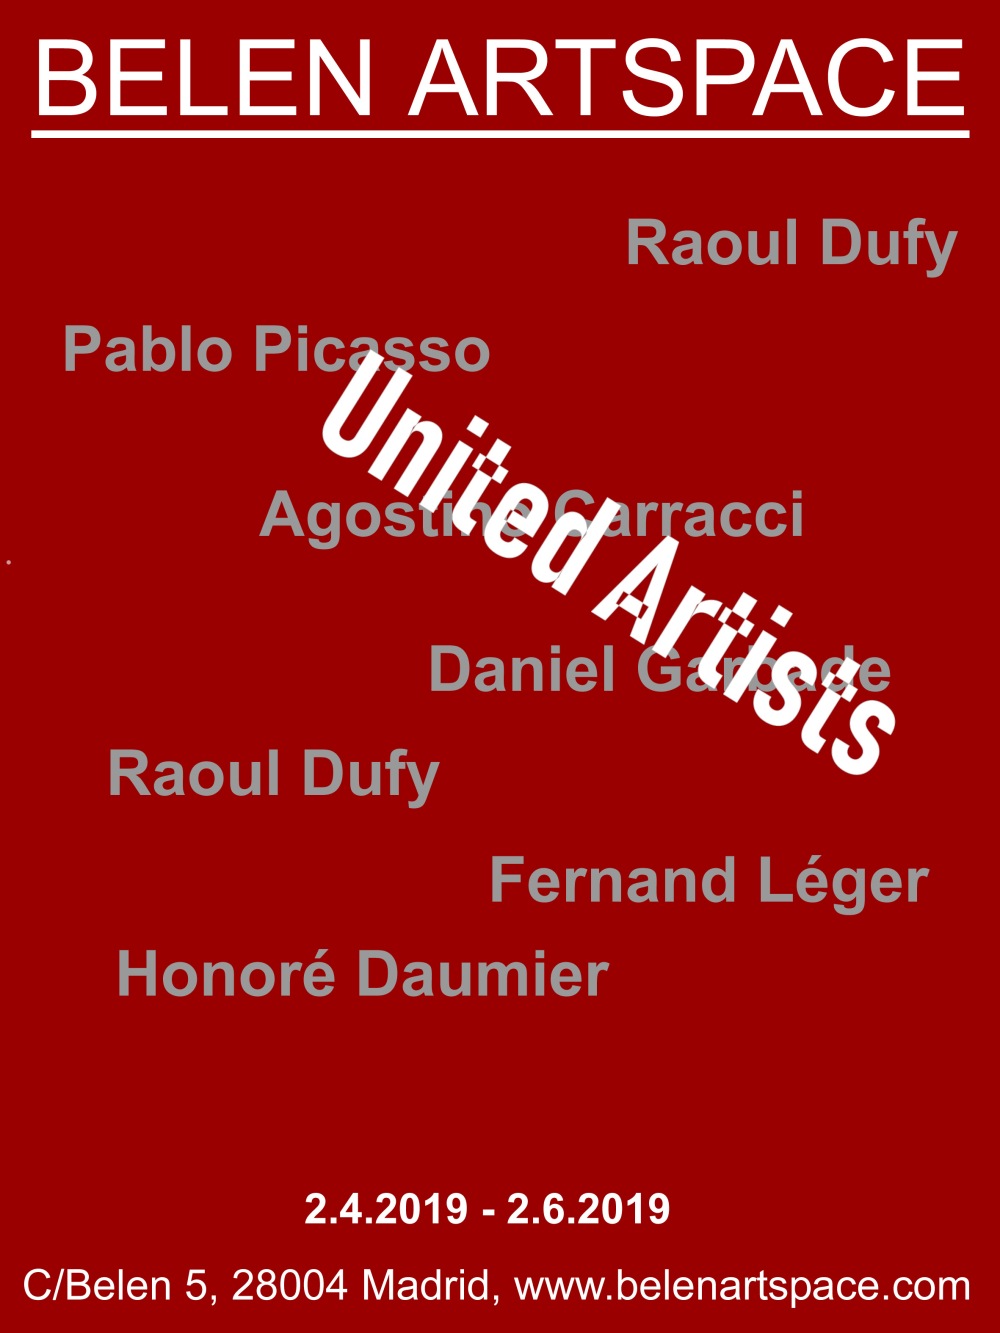 Pablo Picasso, Fernand leger,Daniel Garbade,Raoul Dufy, Agostino Carracci,Honore Daumier,Madrid,United artists,chueca